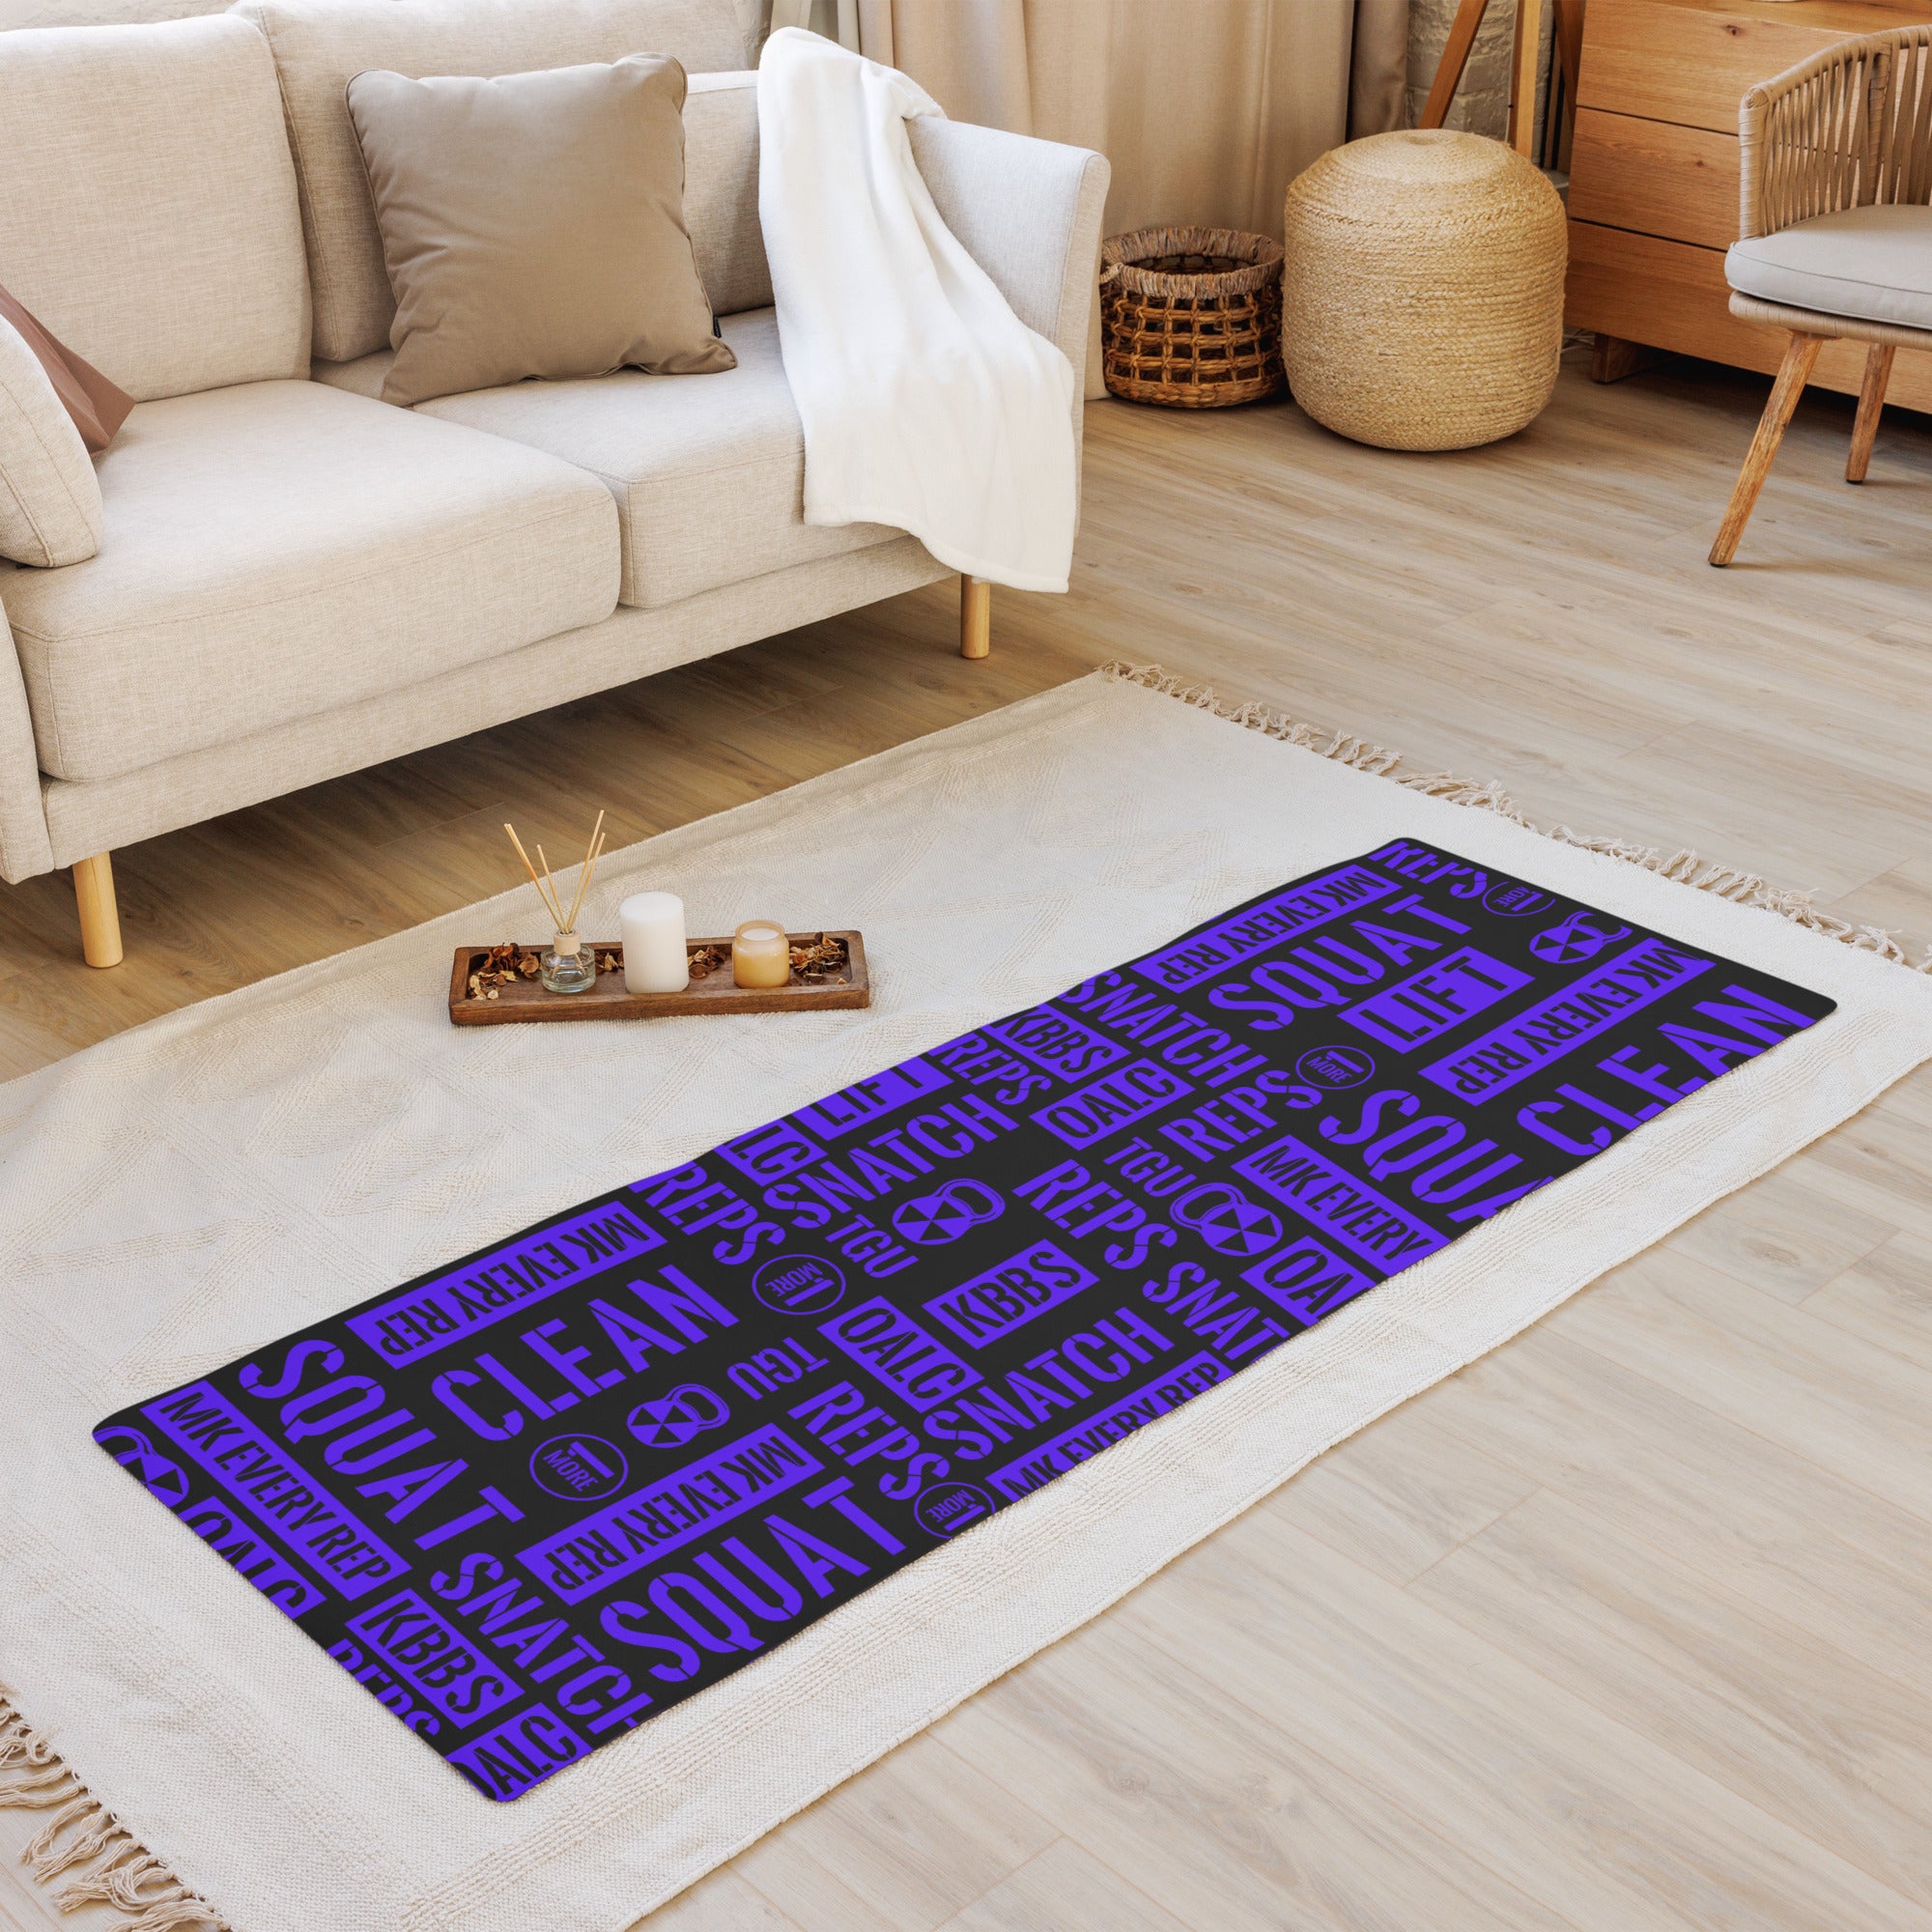 Black/Purple Acronyms Yoga mat